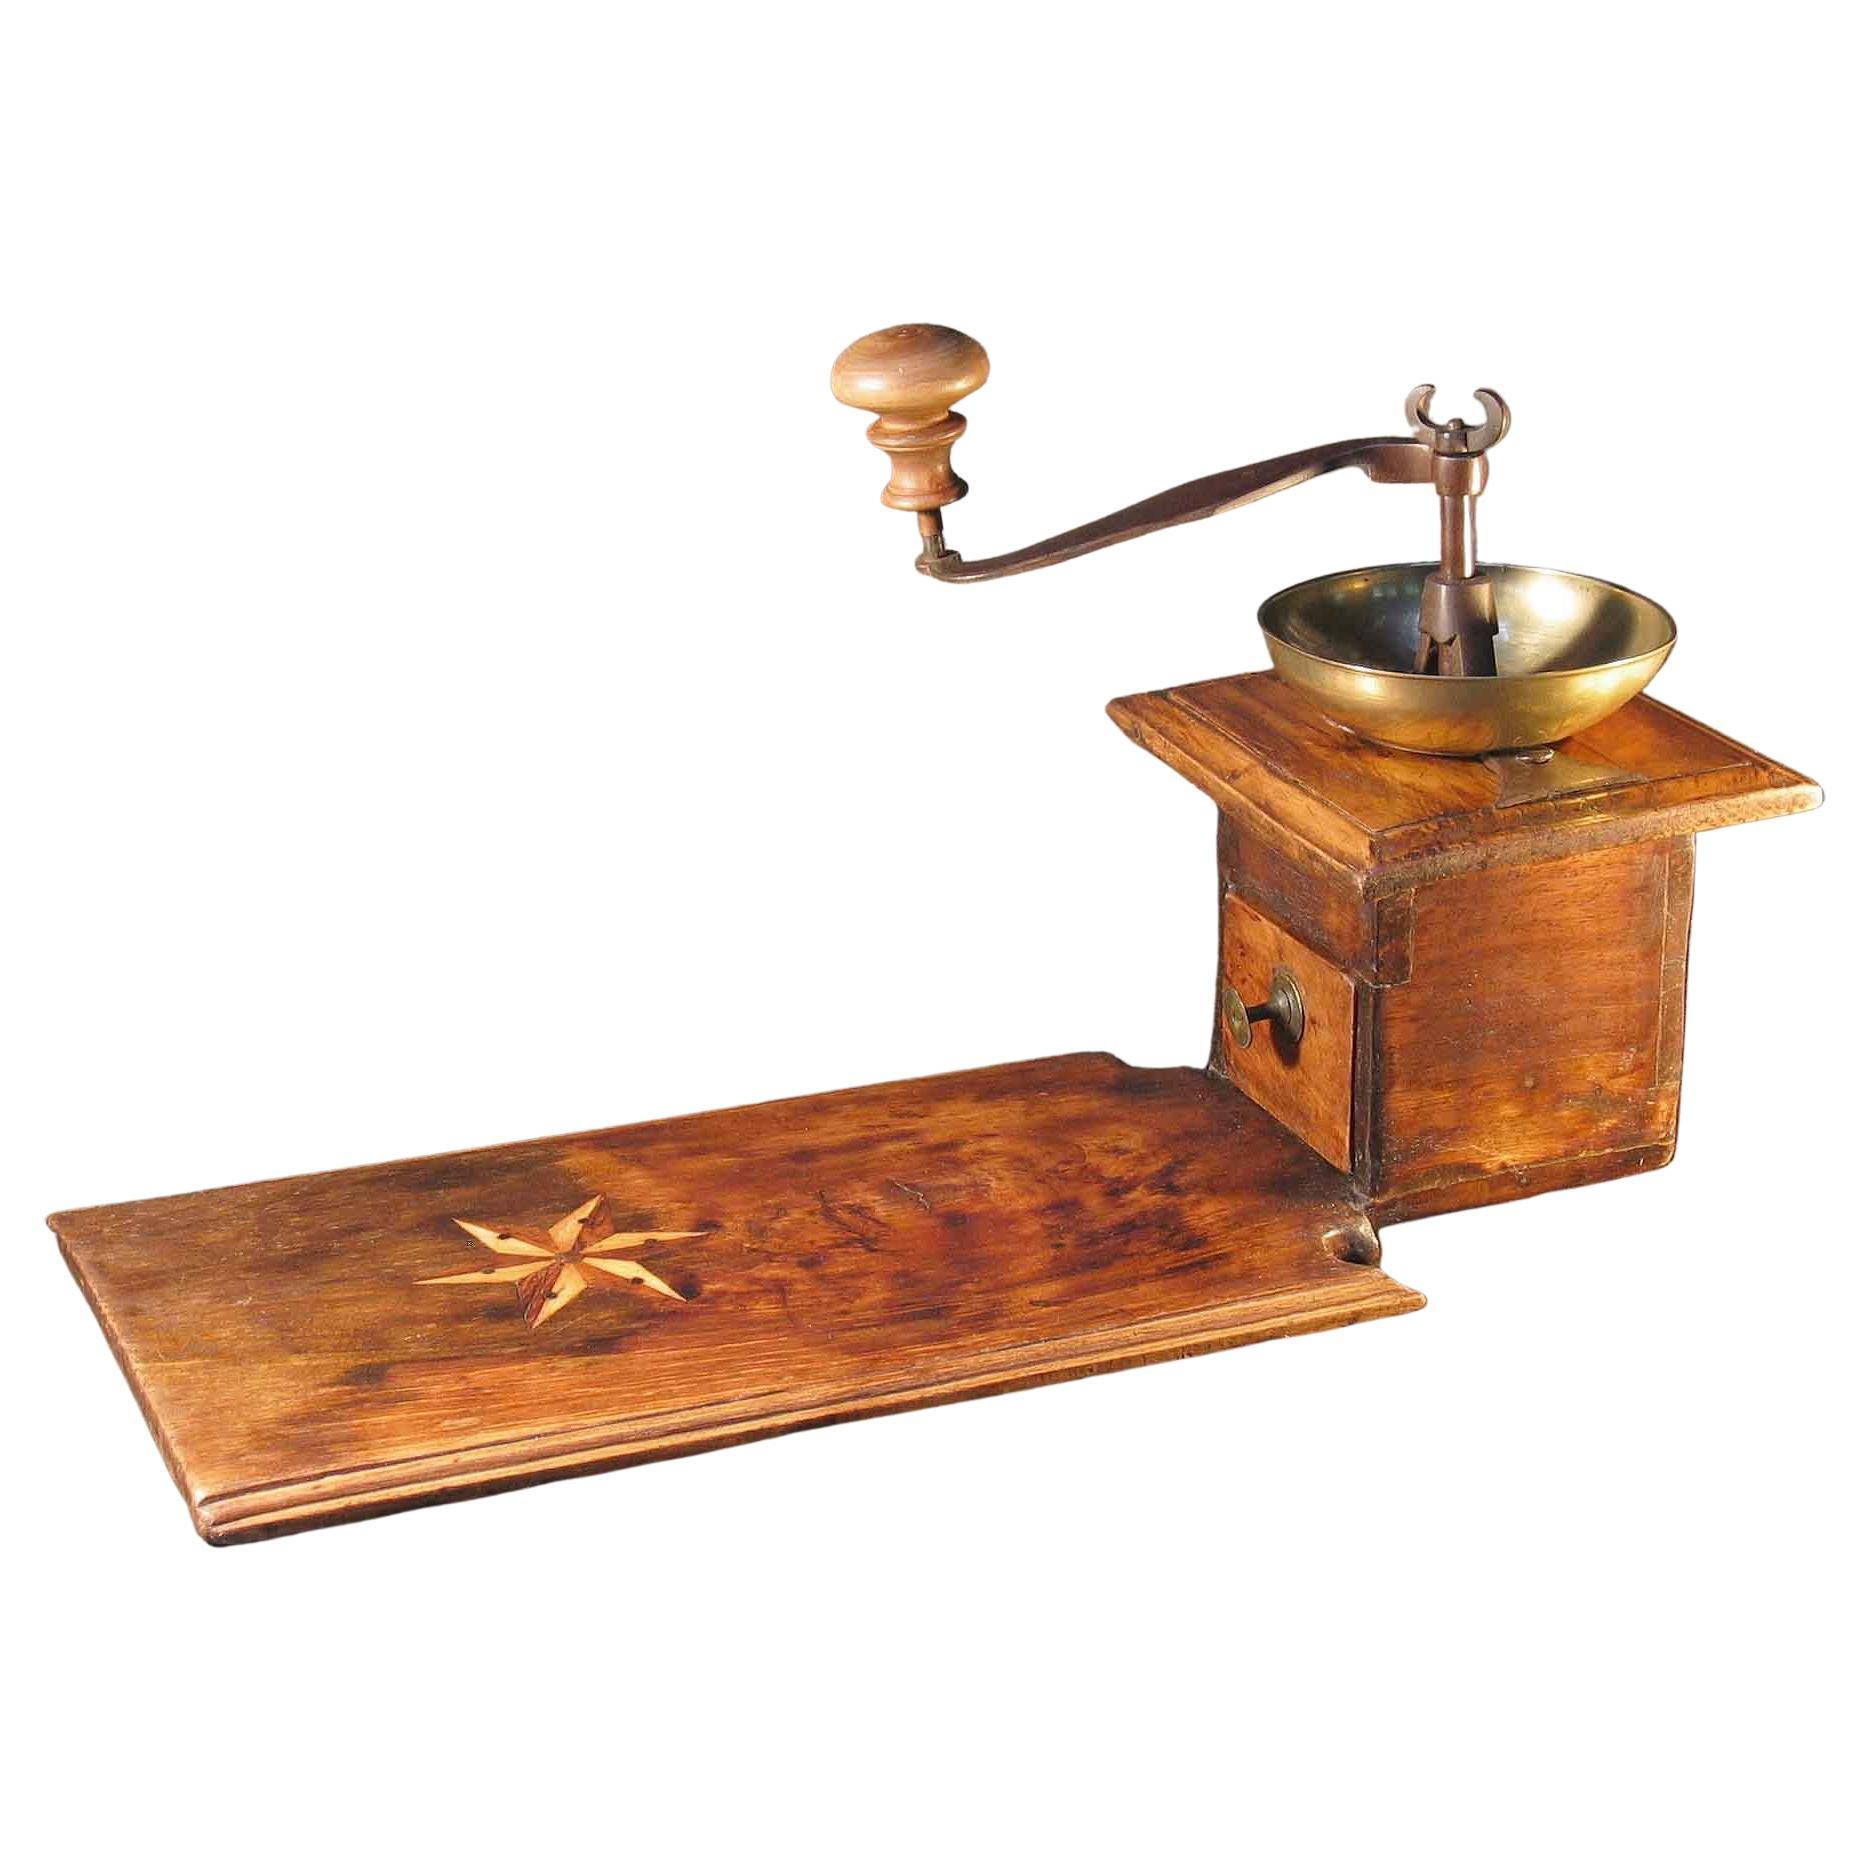 Antique Style Top Crank Coffee Grinder Kit Mechanism - Antique Copper